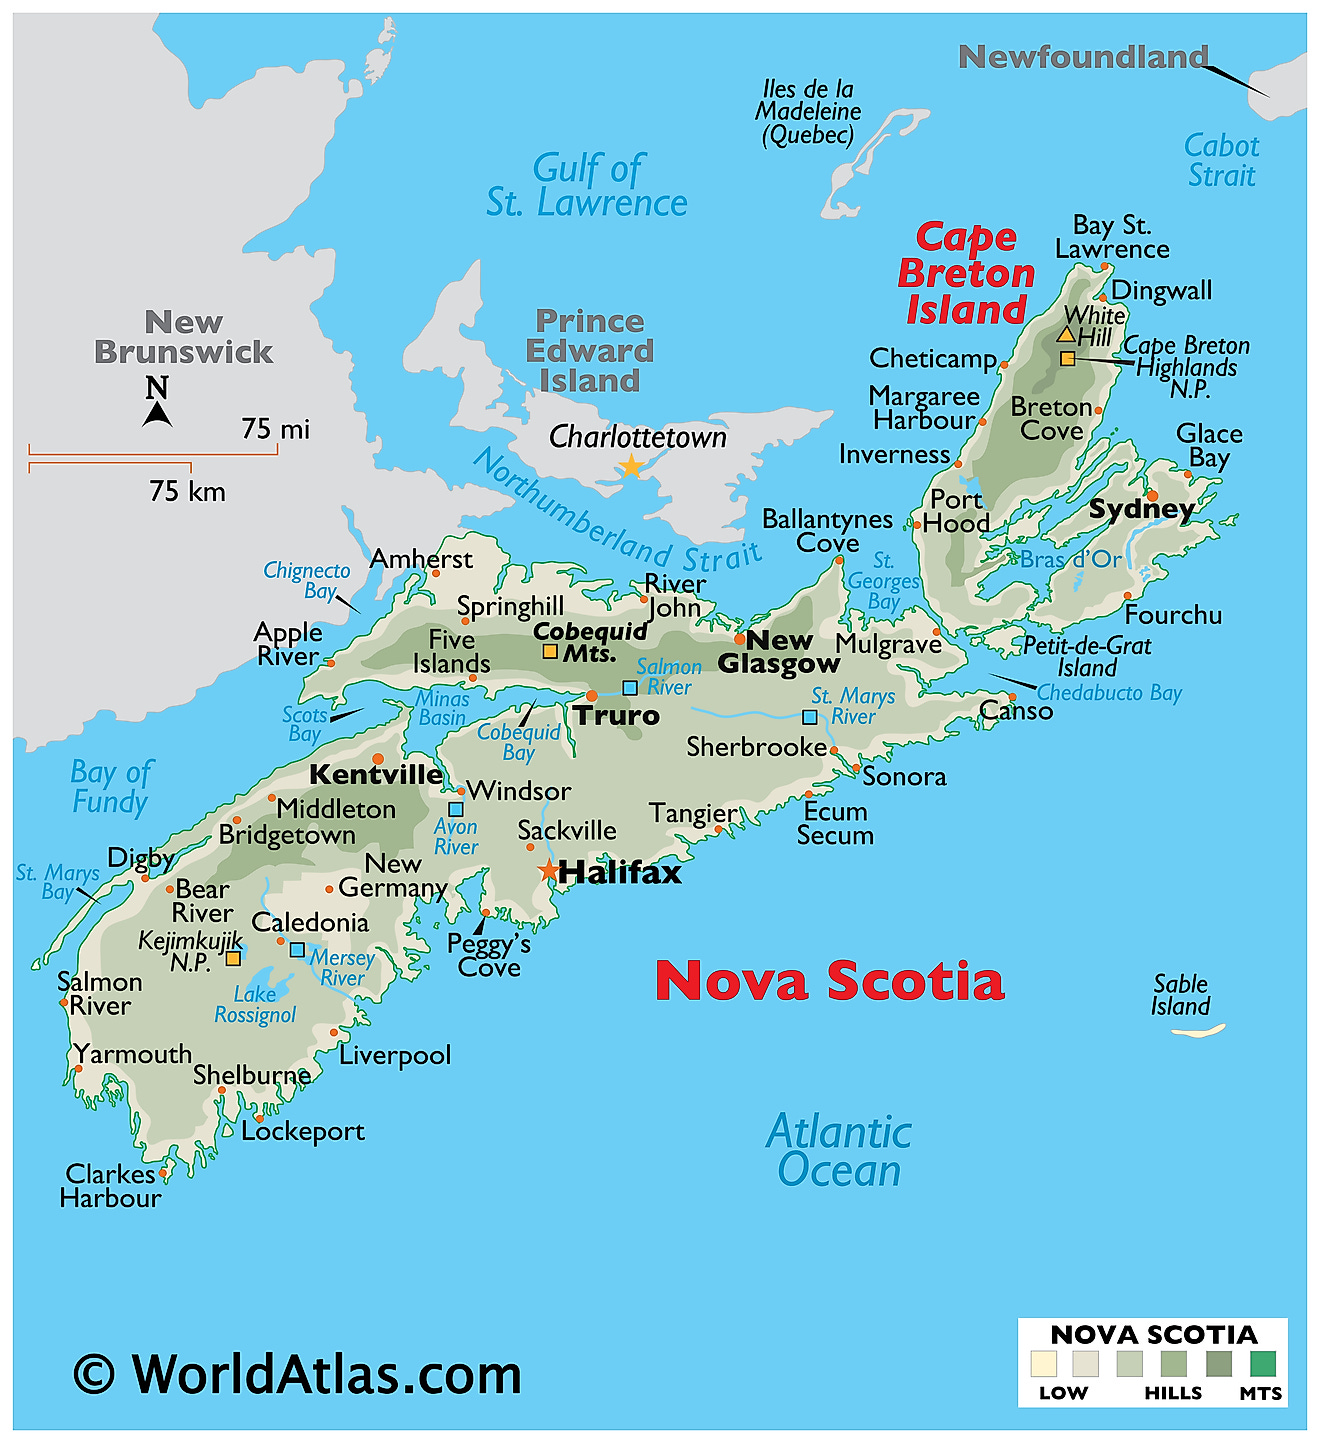 Nova Scotia Maps & Facts - World Atlas